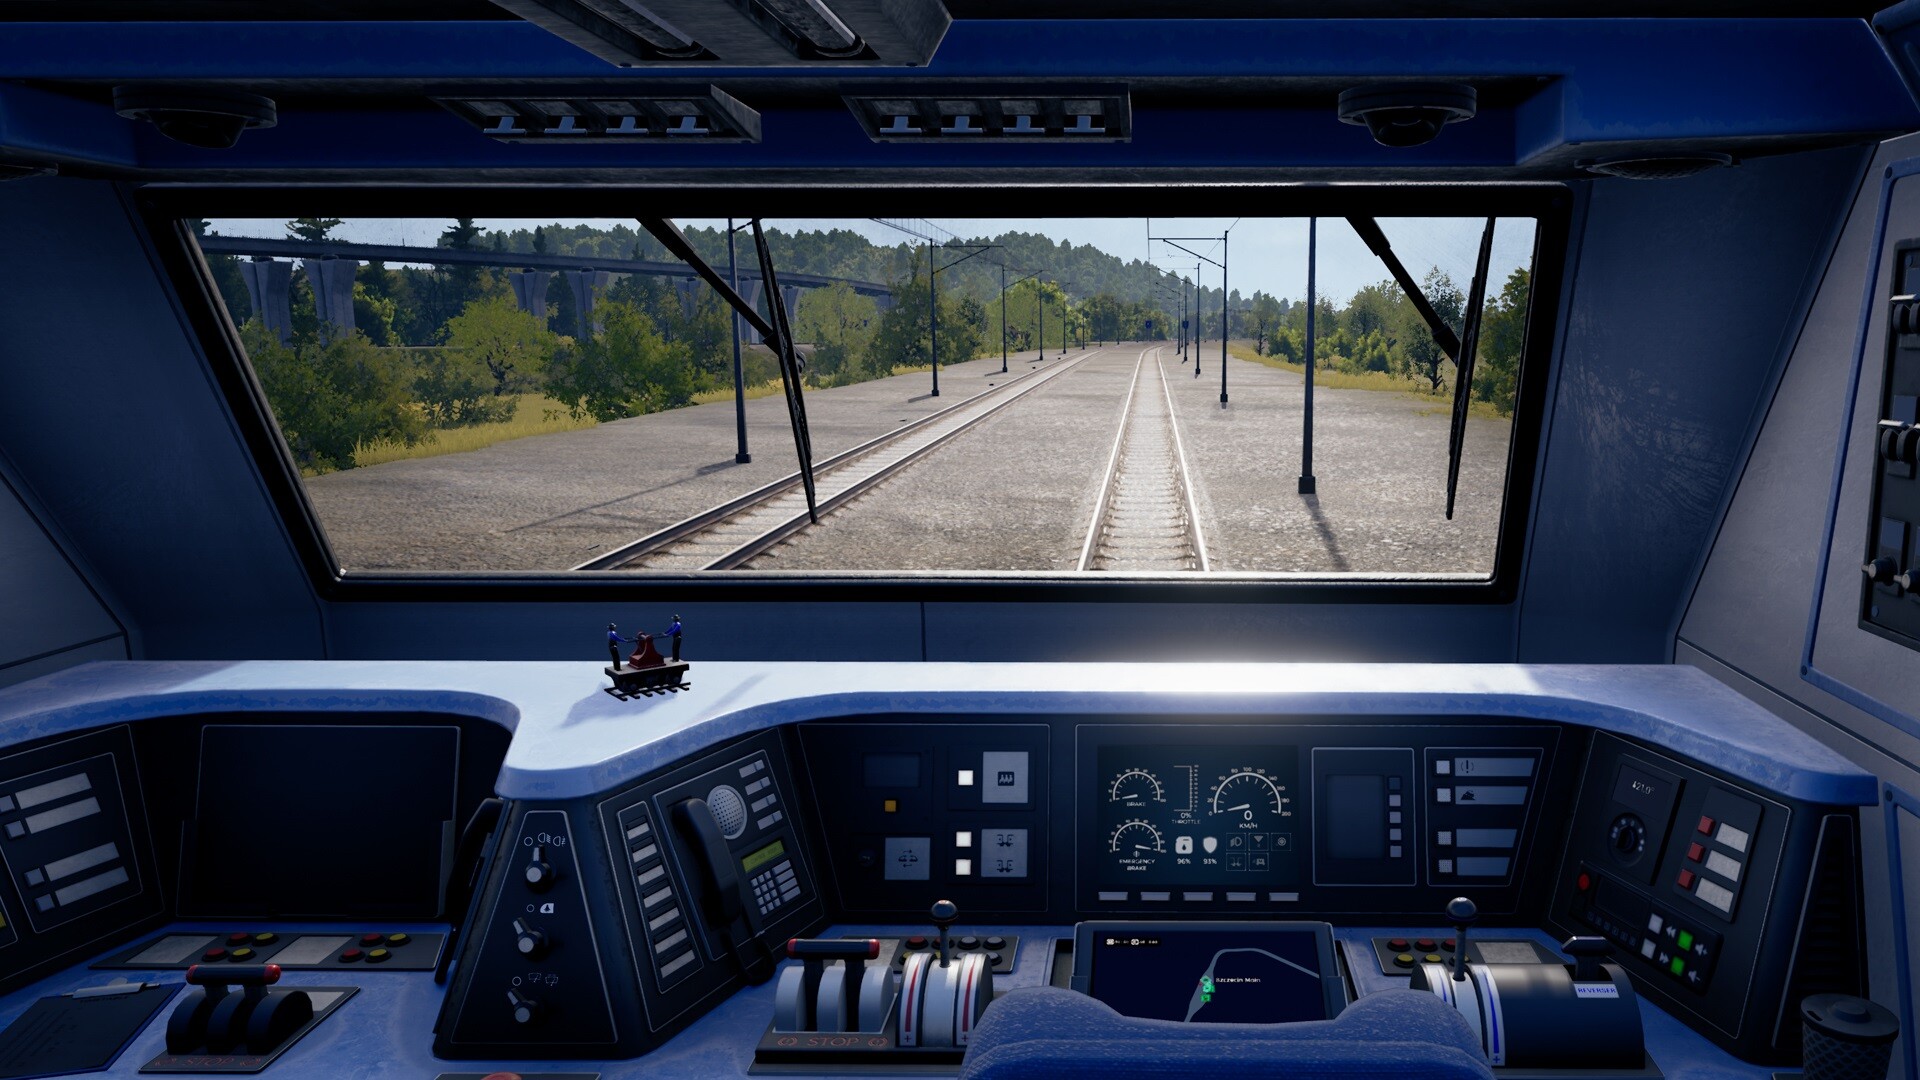 Train Life: A Railway Simulator - Supporter Pack DLC Steam CD Key